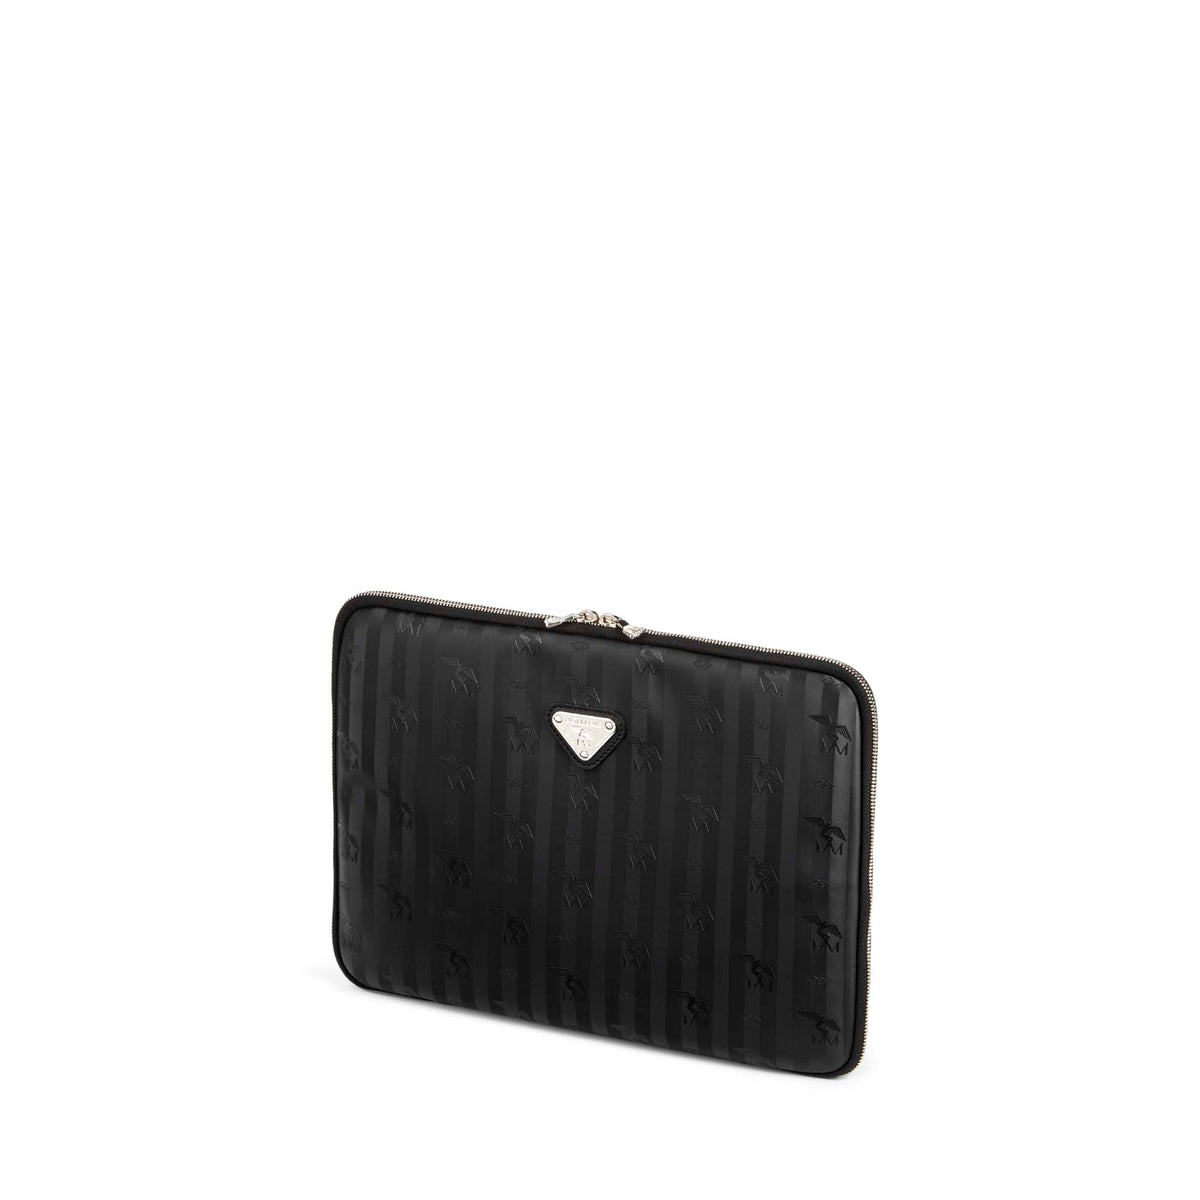 ROETI | Laptopo bag black/silber